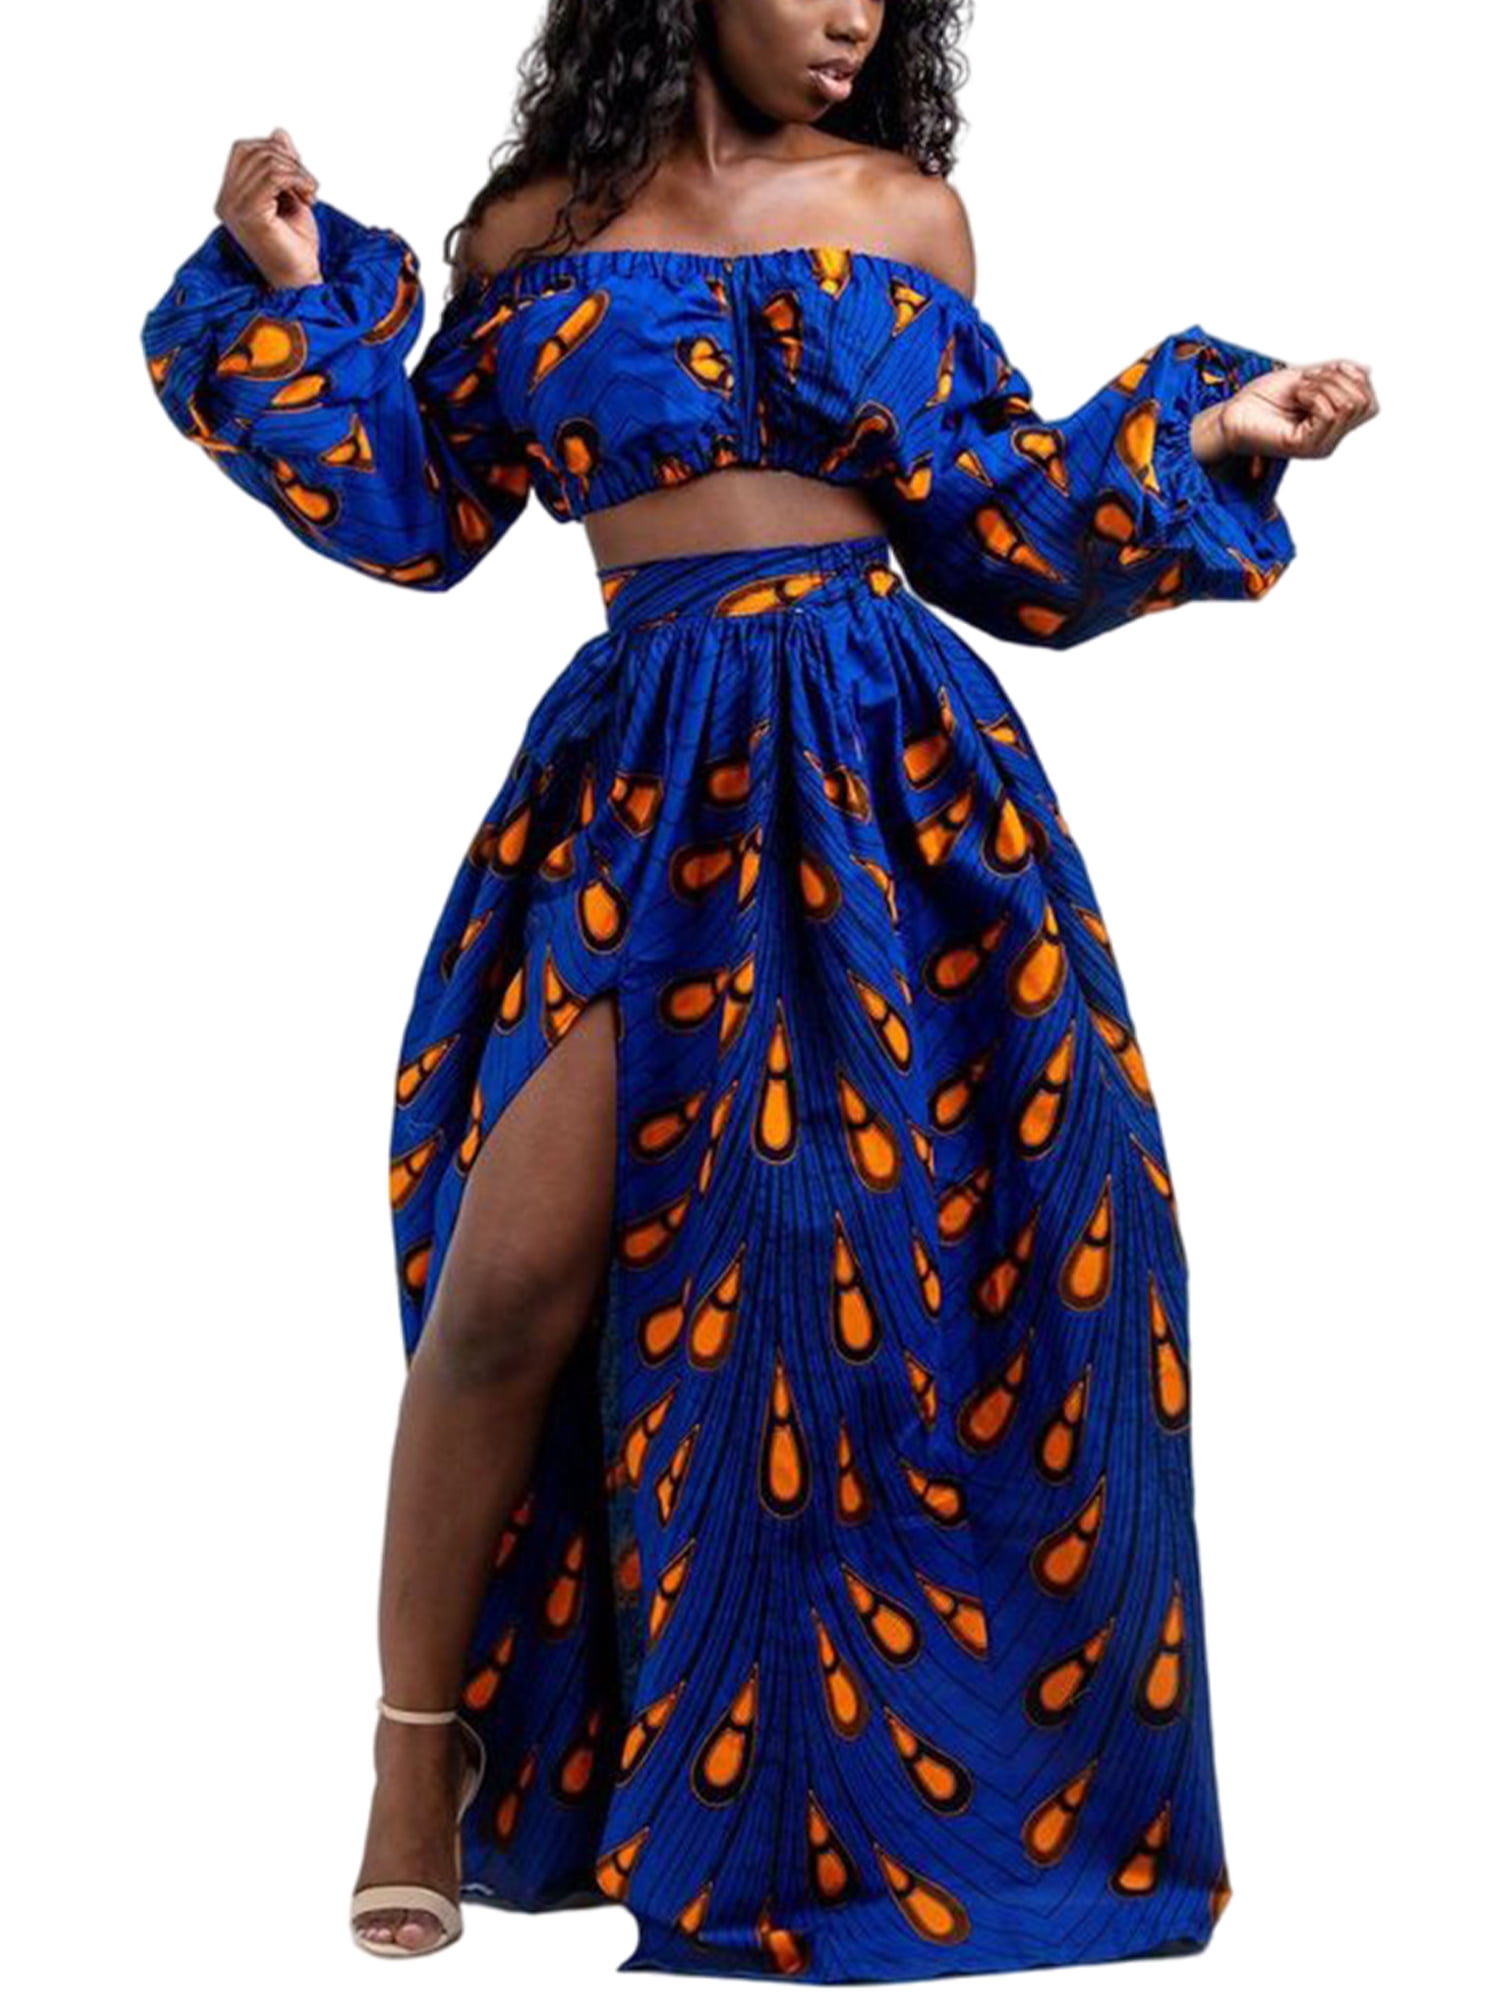 New Women's African Skirts Suit Set Top Skirt Boho Dashiki Ethnic S#60 Free size 